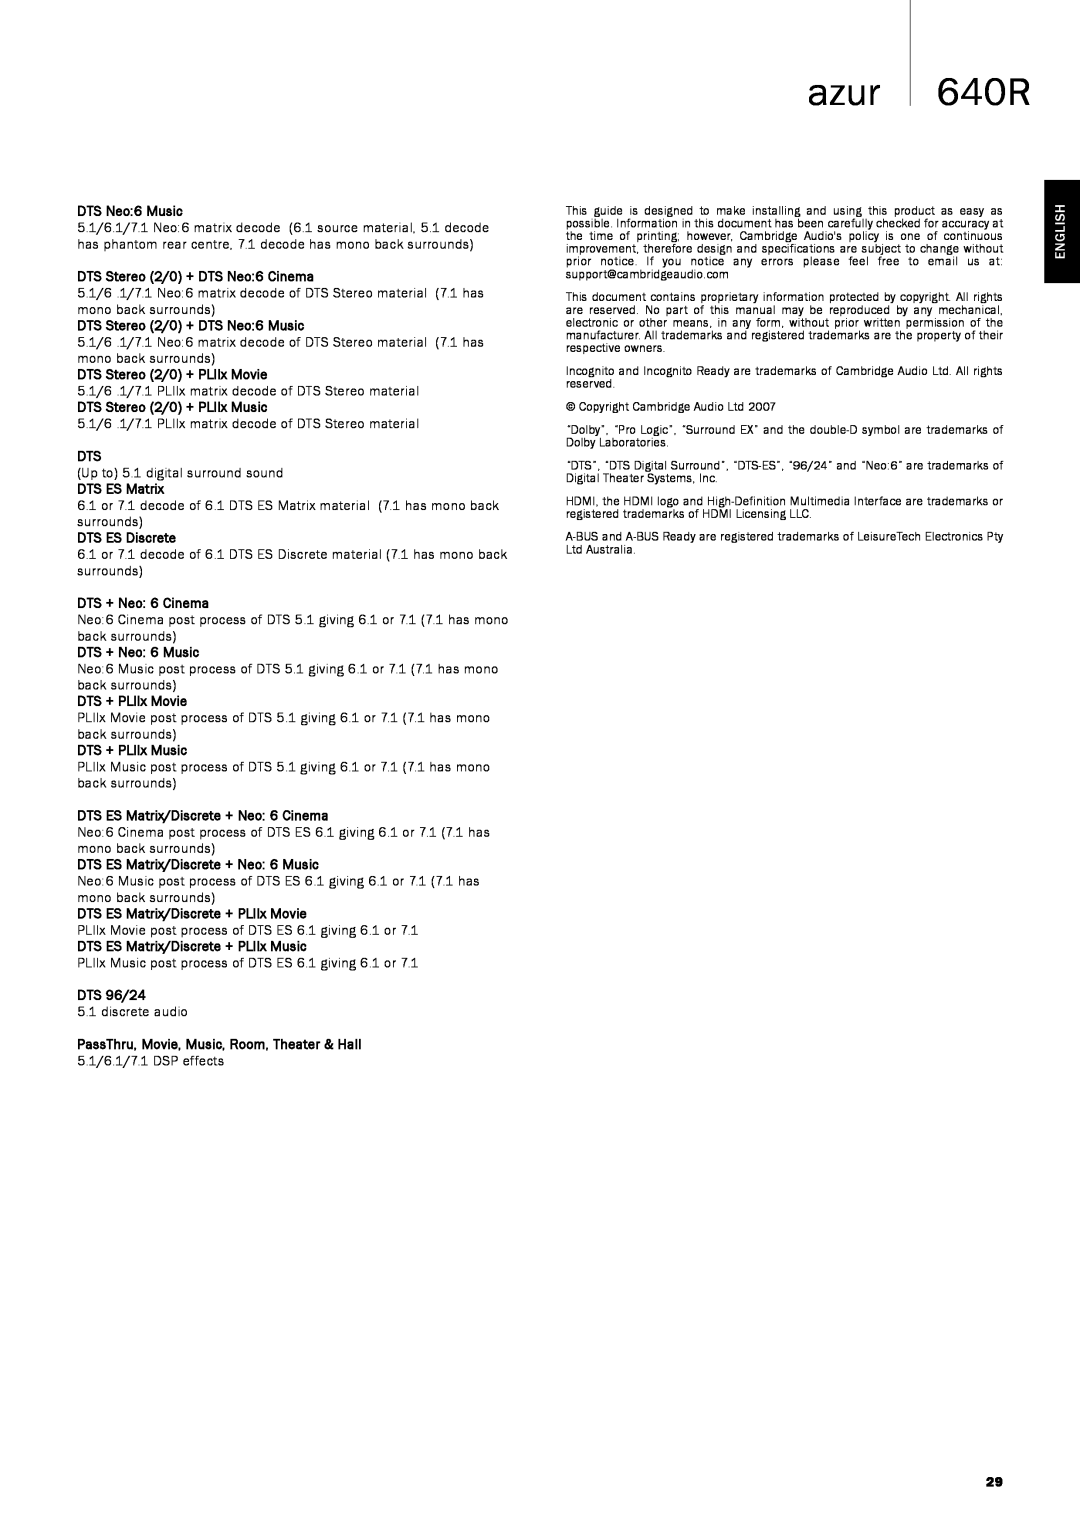 Cambridge Audio 640Razur user manual azur 640R, DTS Neo6 Music, English 